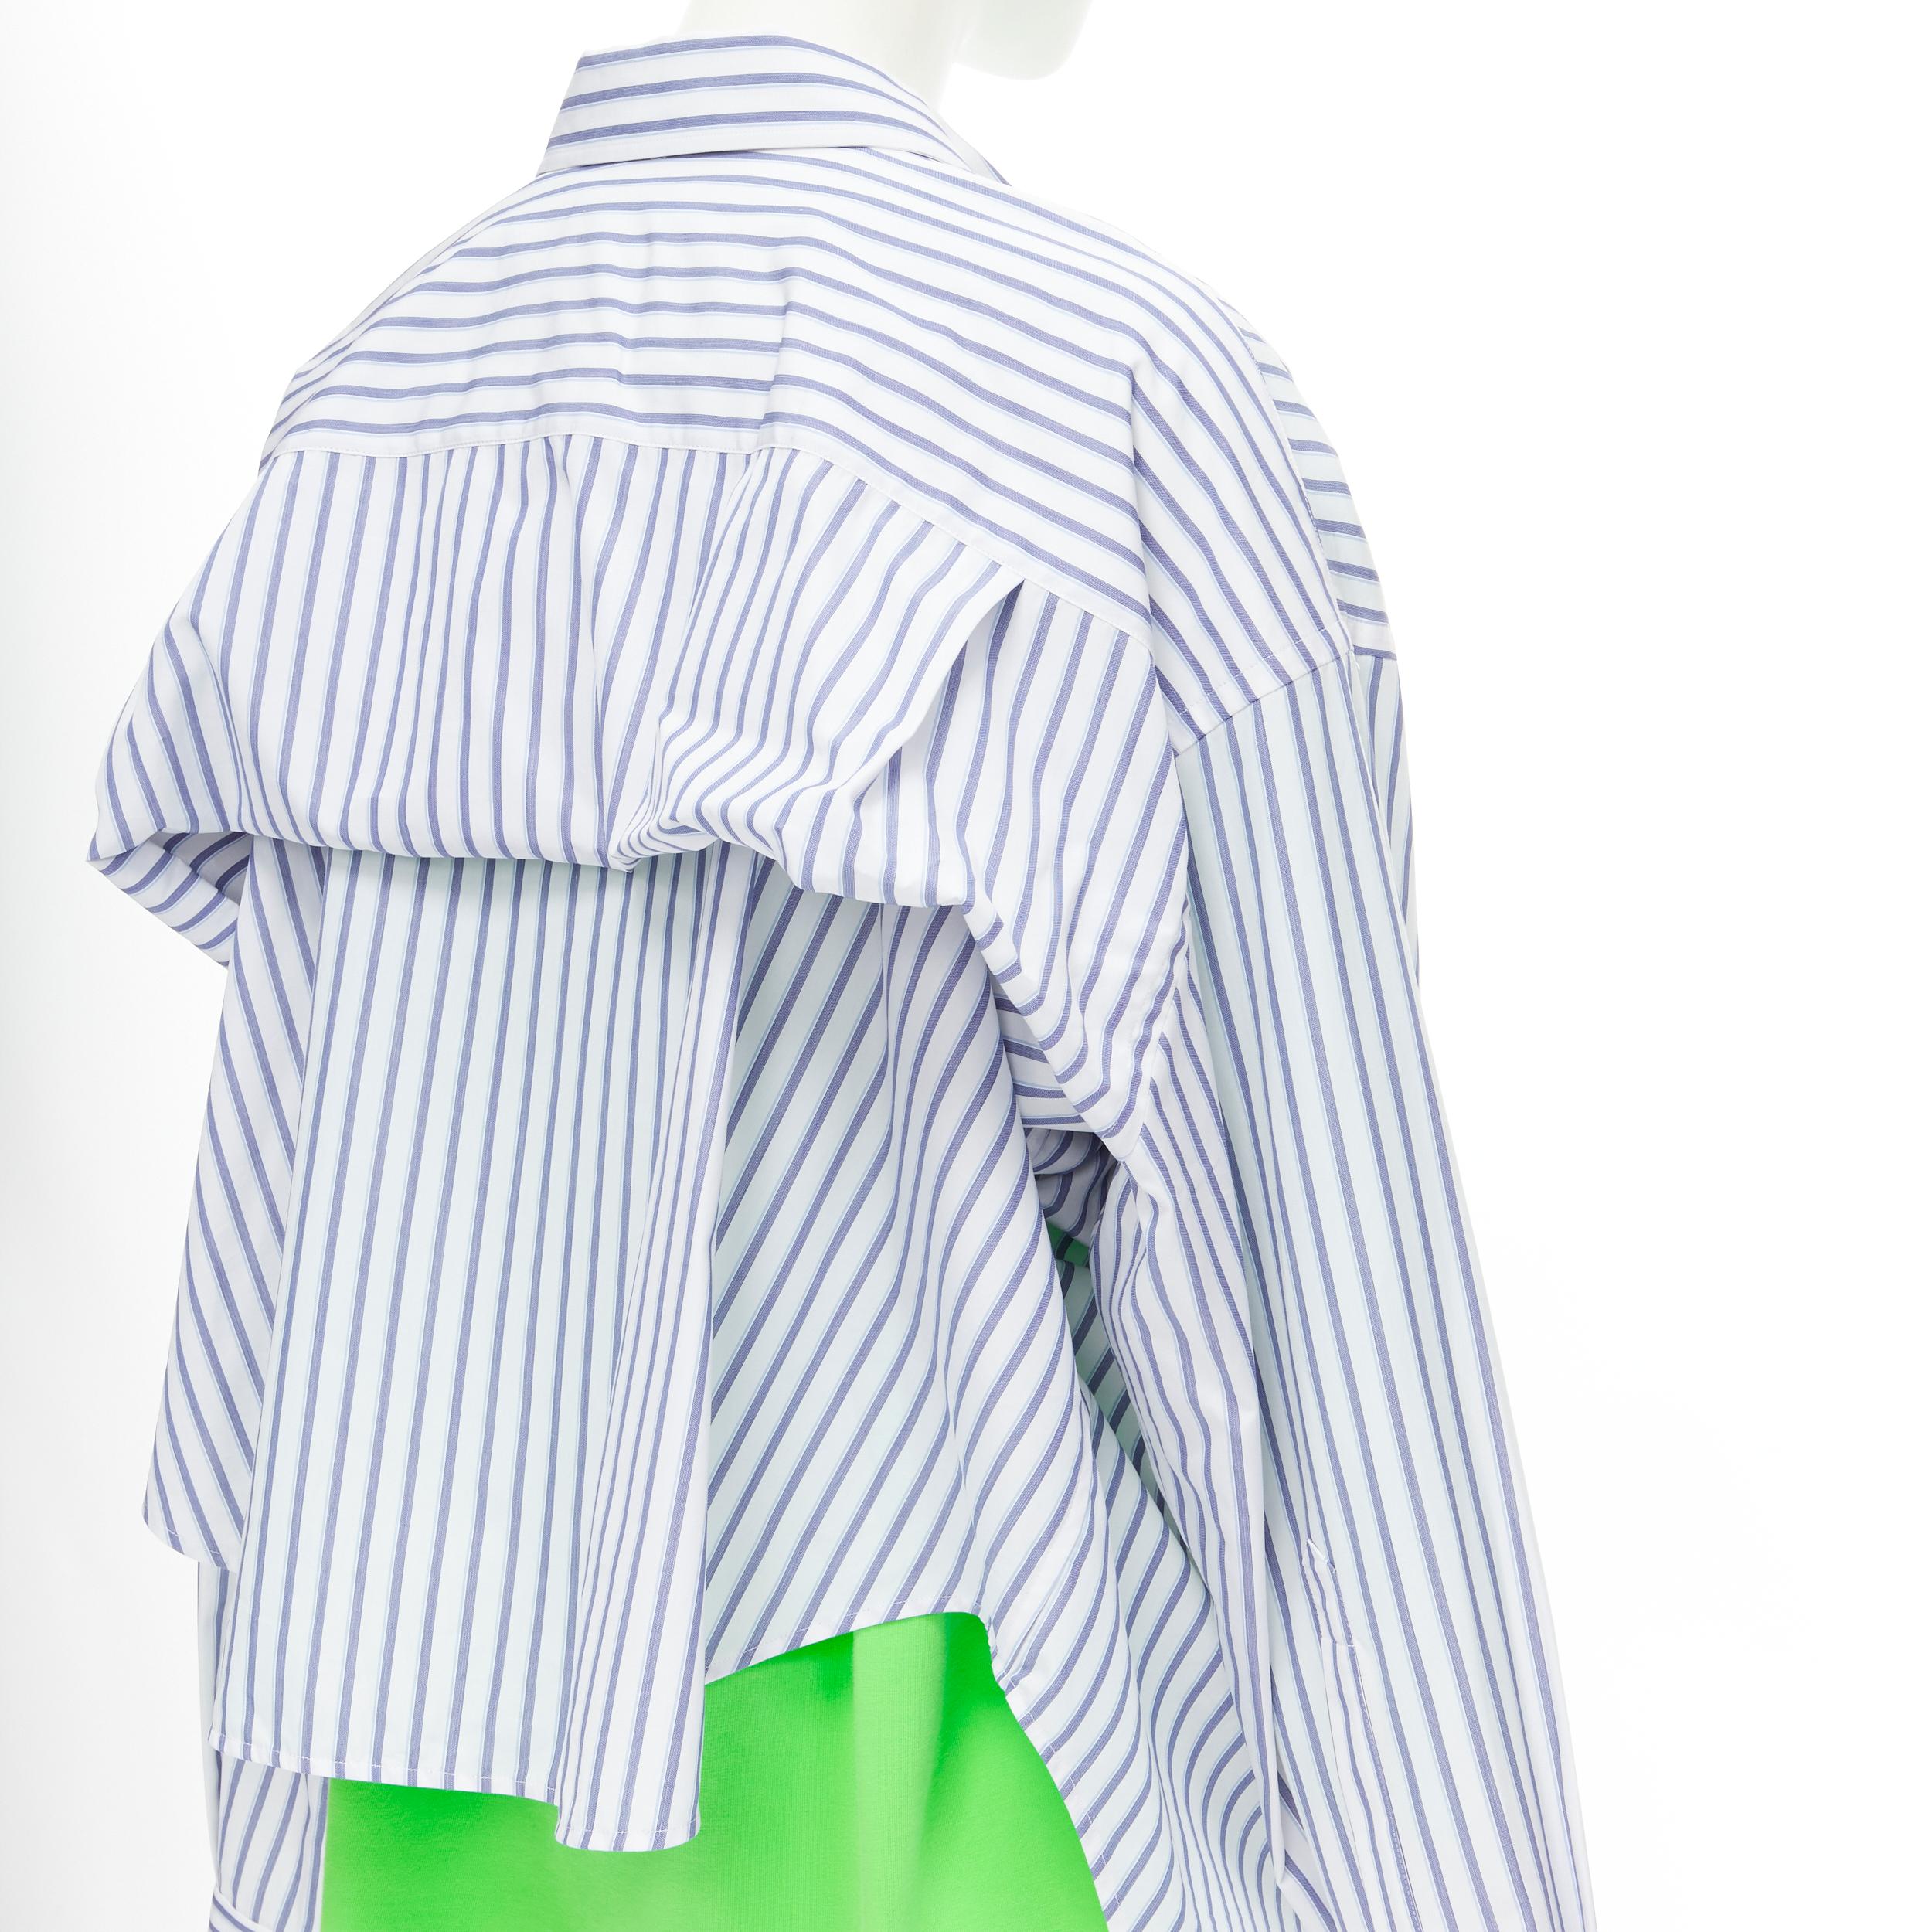 new BALENCIAGA 2017 green tshirt blue striped shirt 2 way draped top FR34 XS For Sale 1